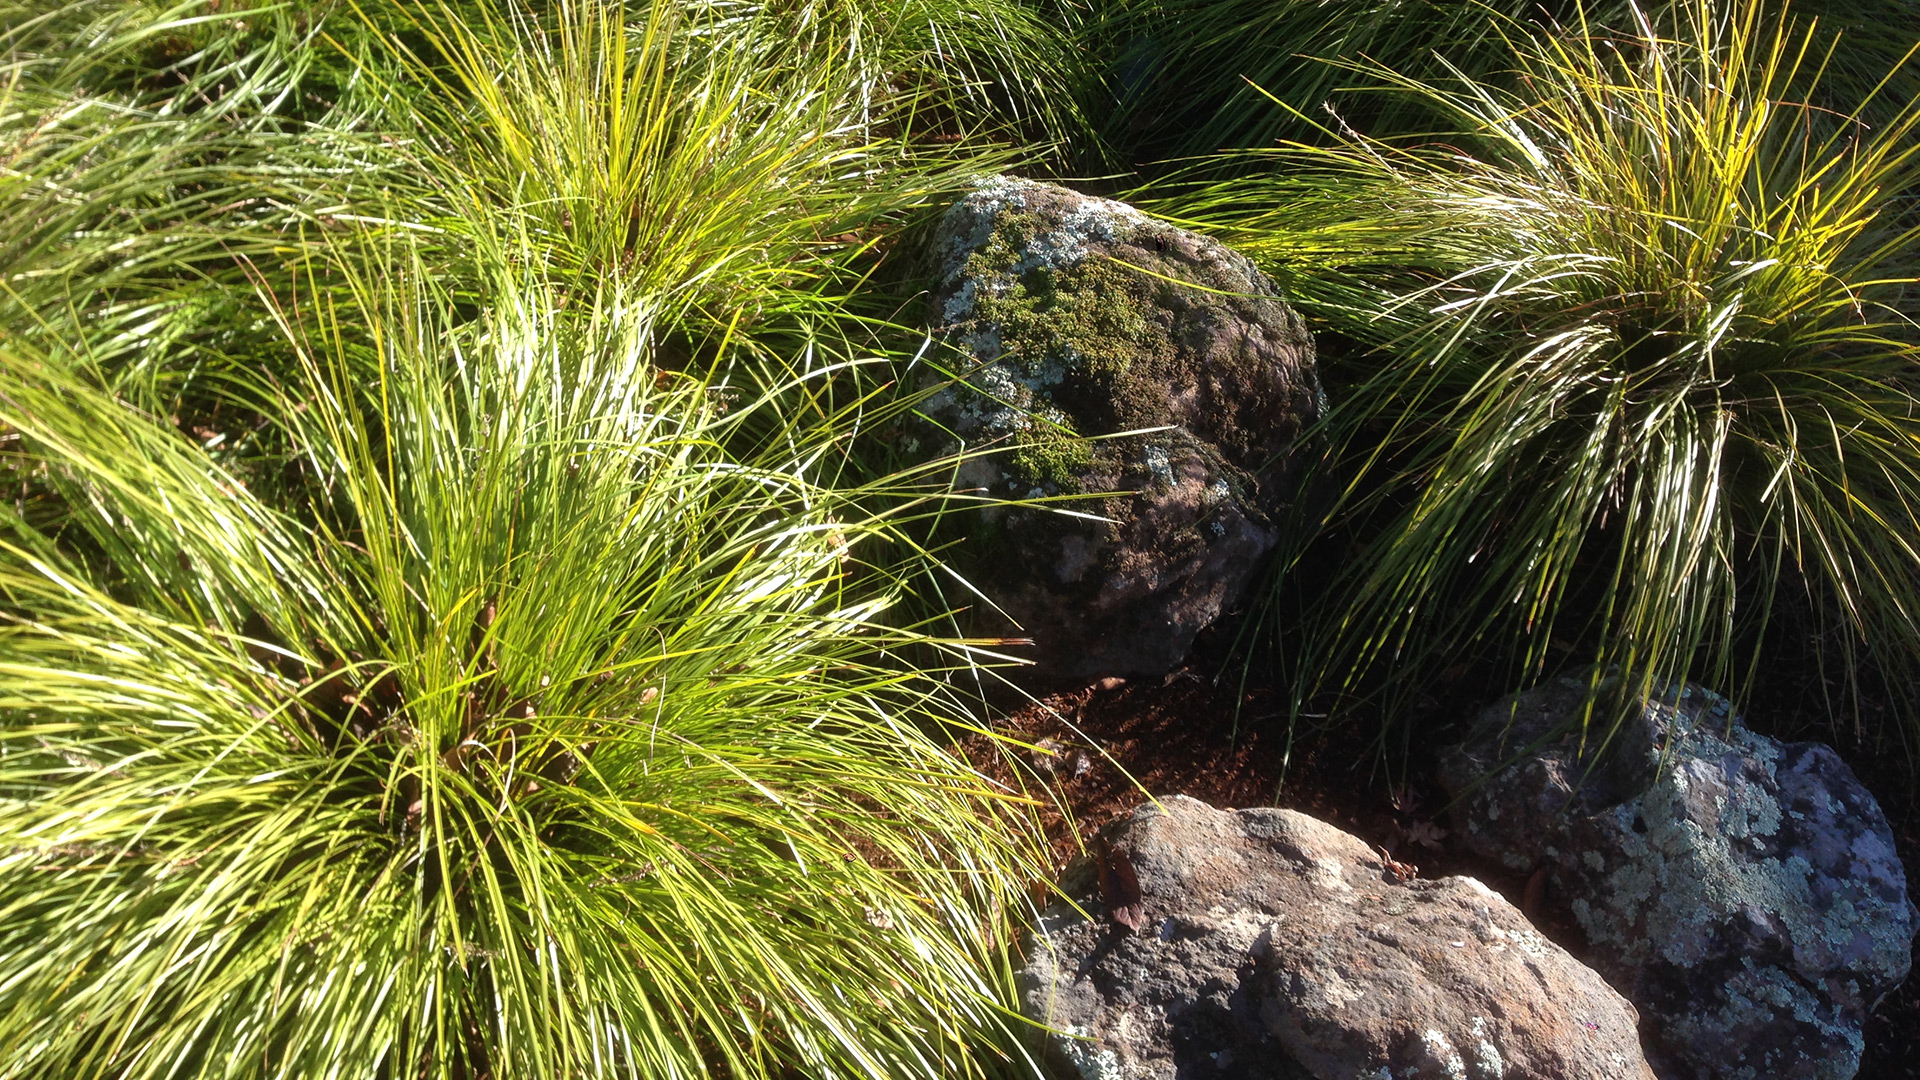 Sonoma fieldstone placement boulders among lomandra 'Breeze' grasses